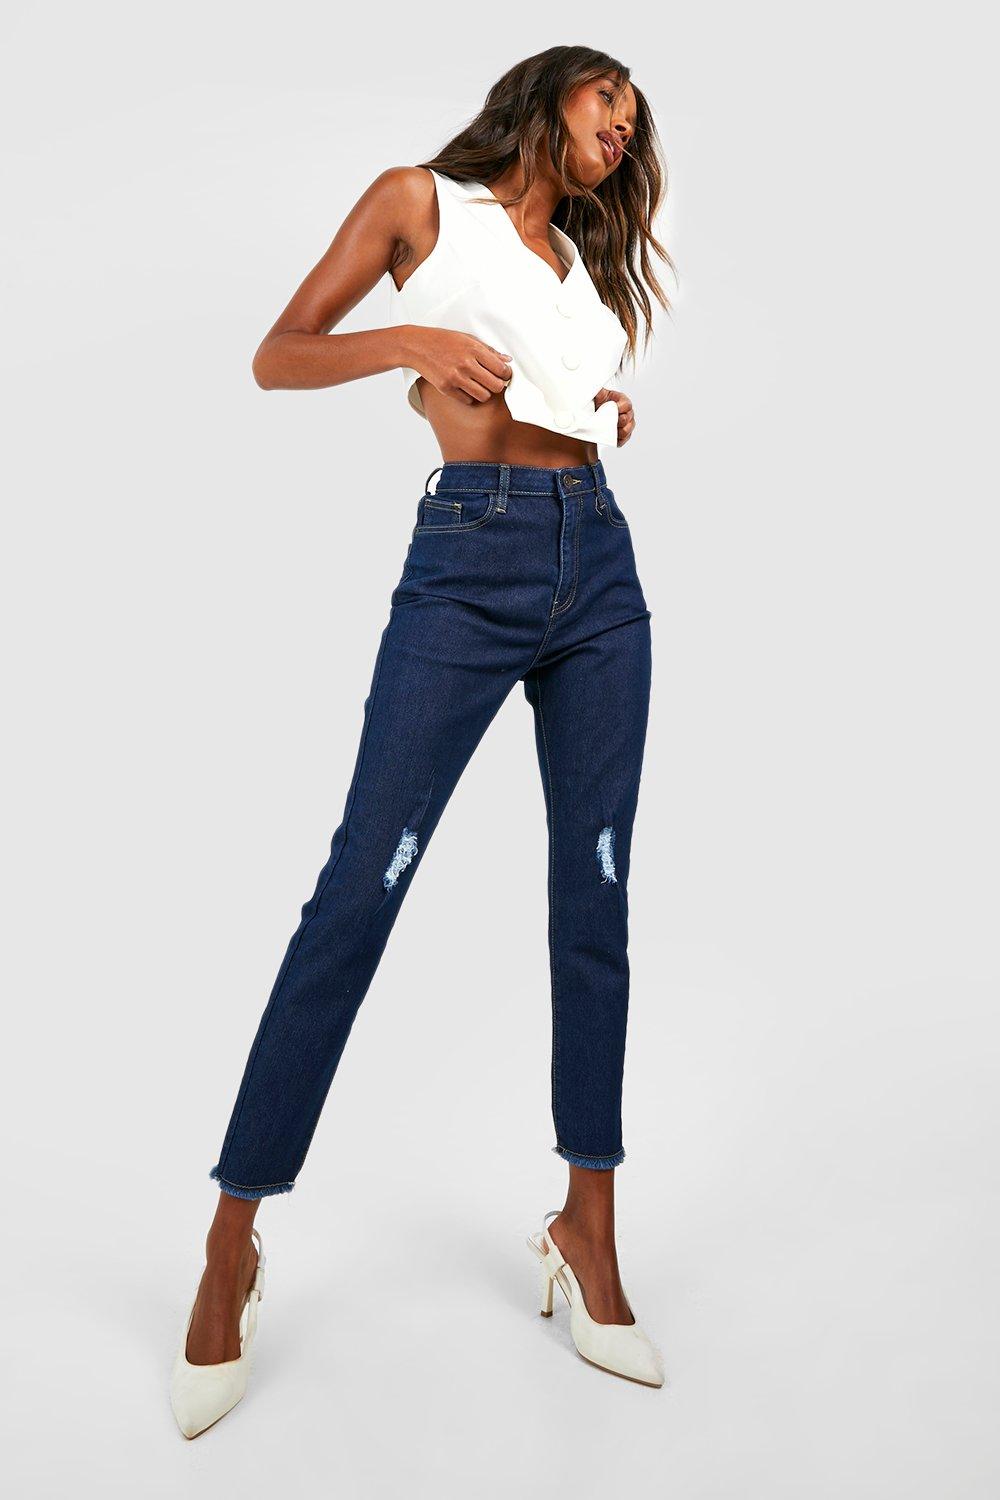 Jeans Womens Denim High Waist Distressed Skinny Jeans